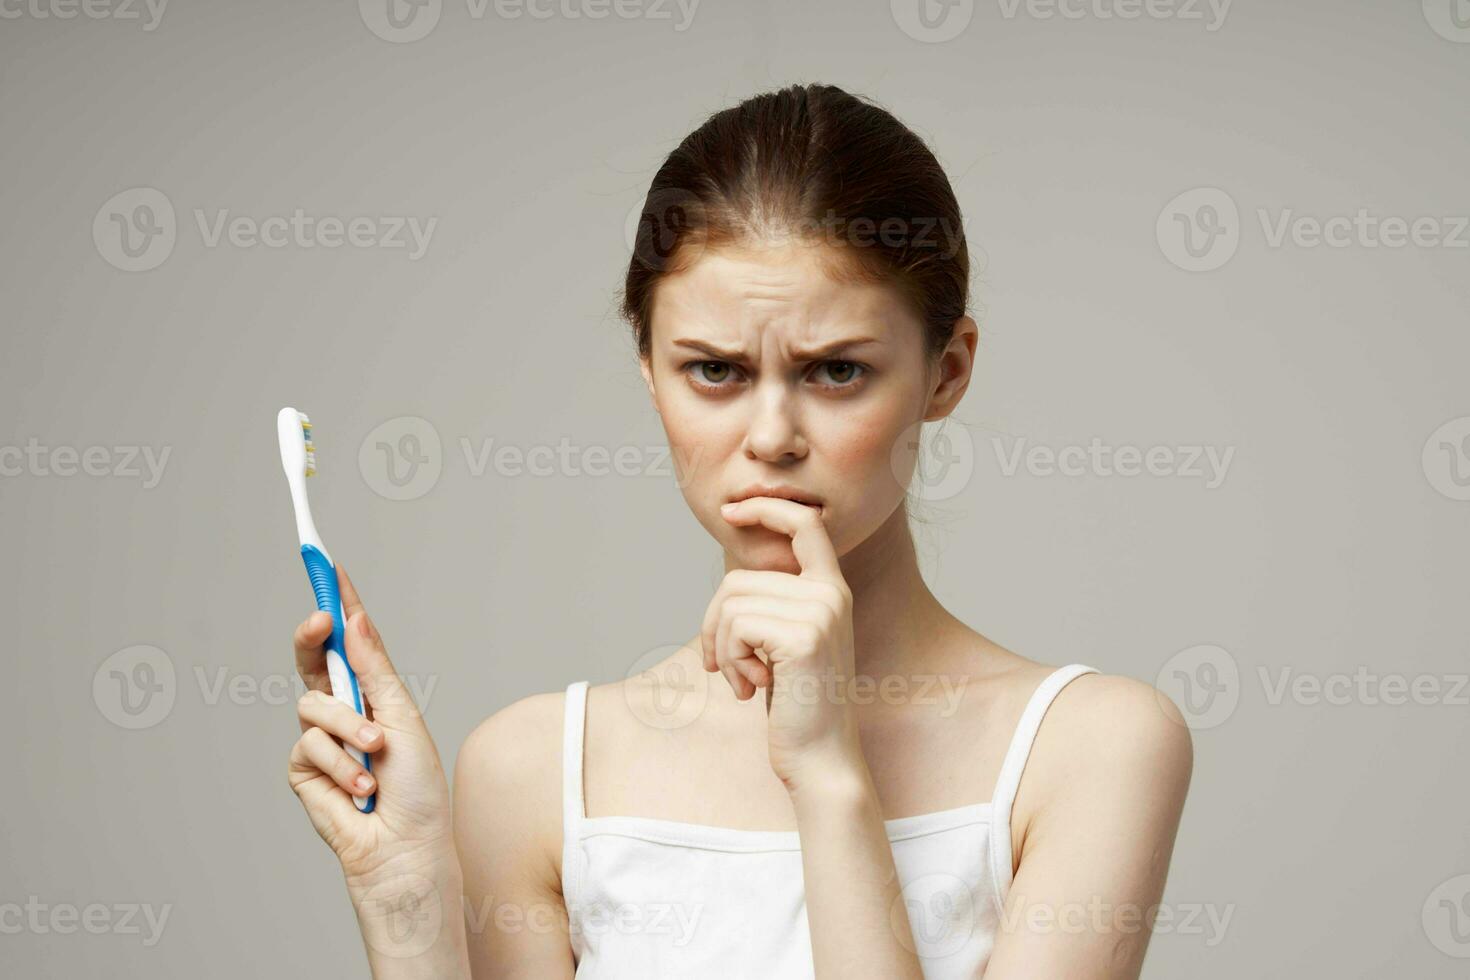 alegre mulher dentro branco camiseta dental higiene saúde Cuidado estúdio estilo de vida foto